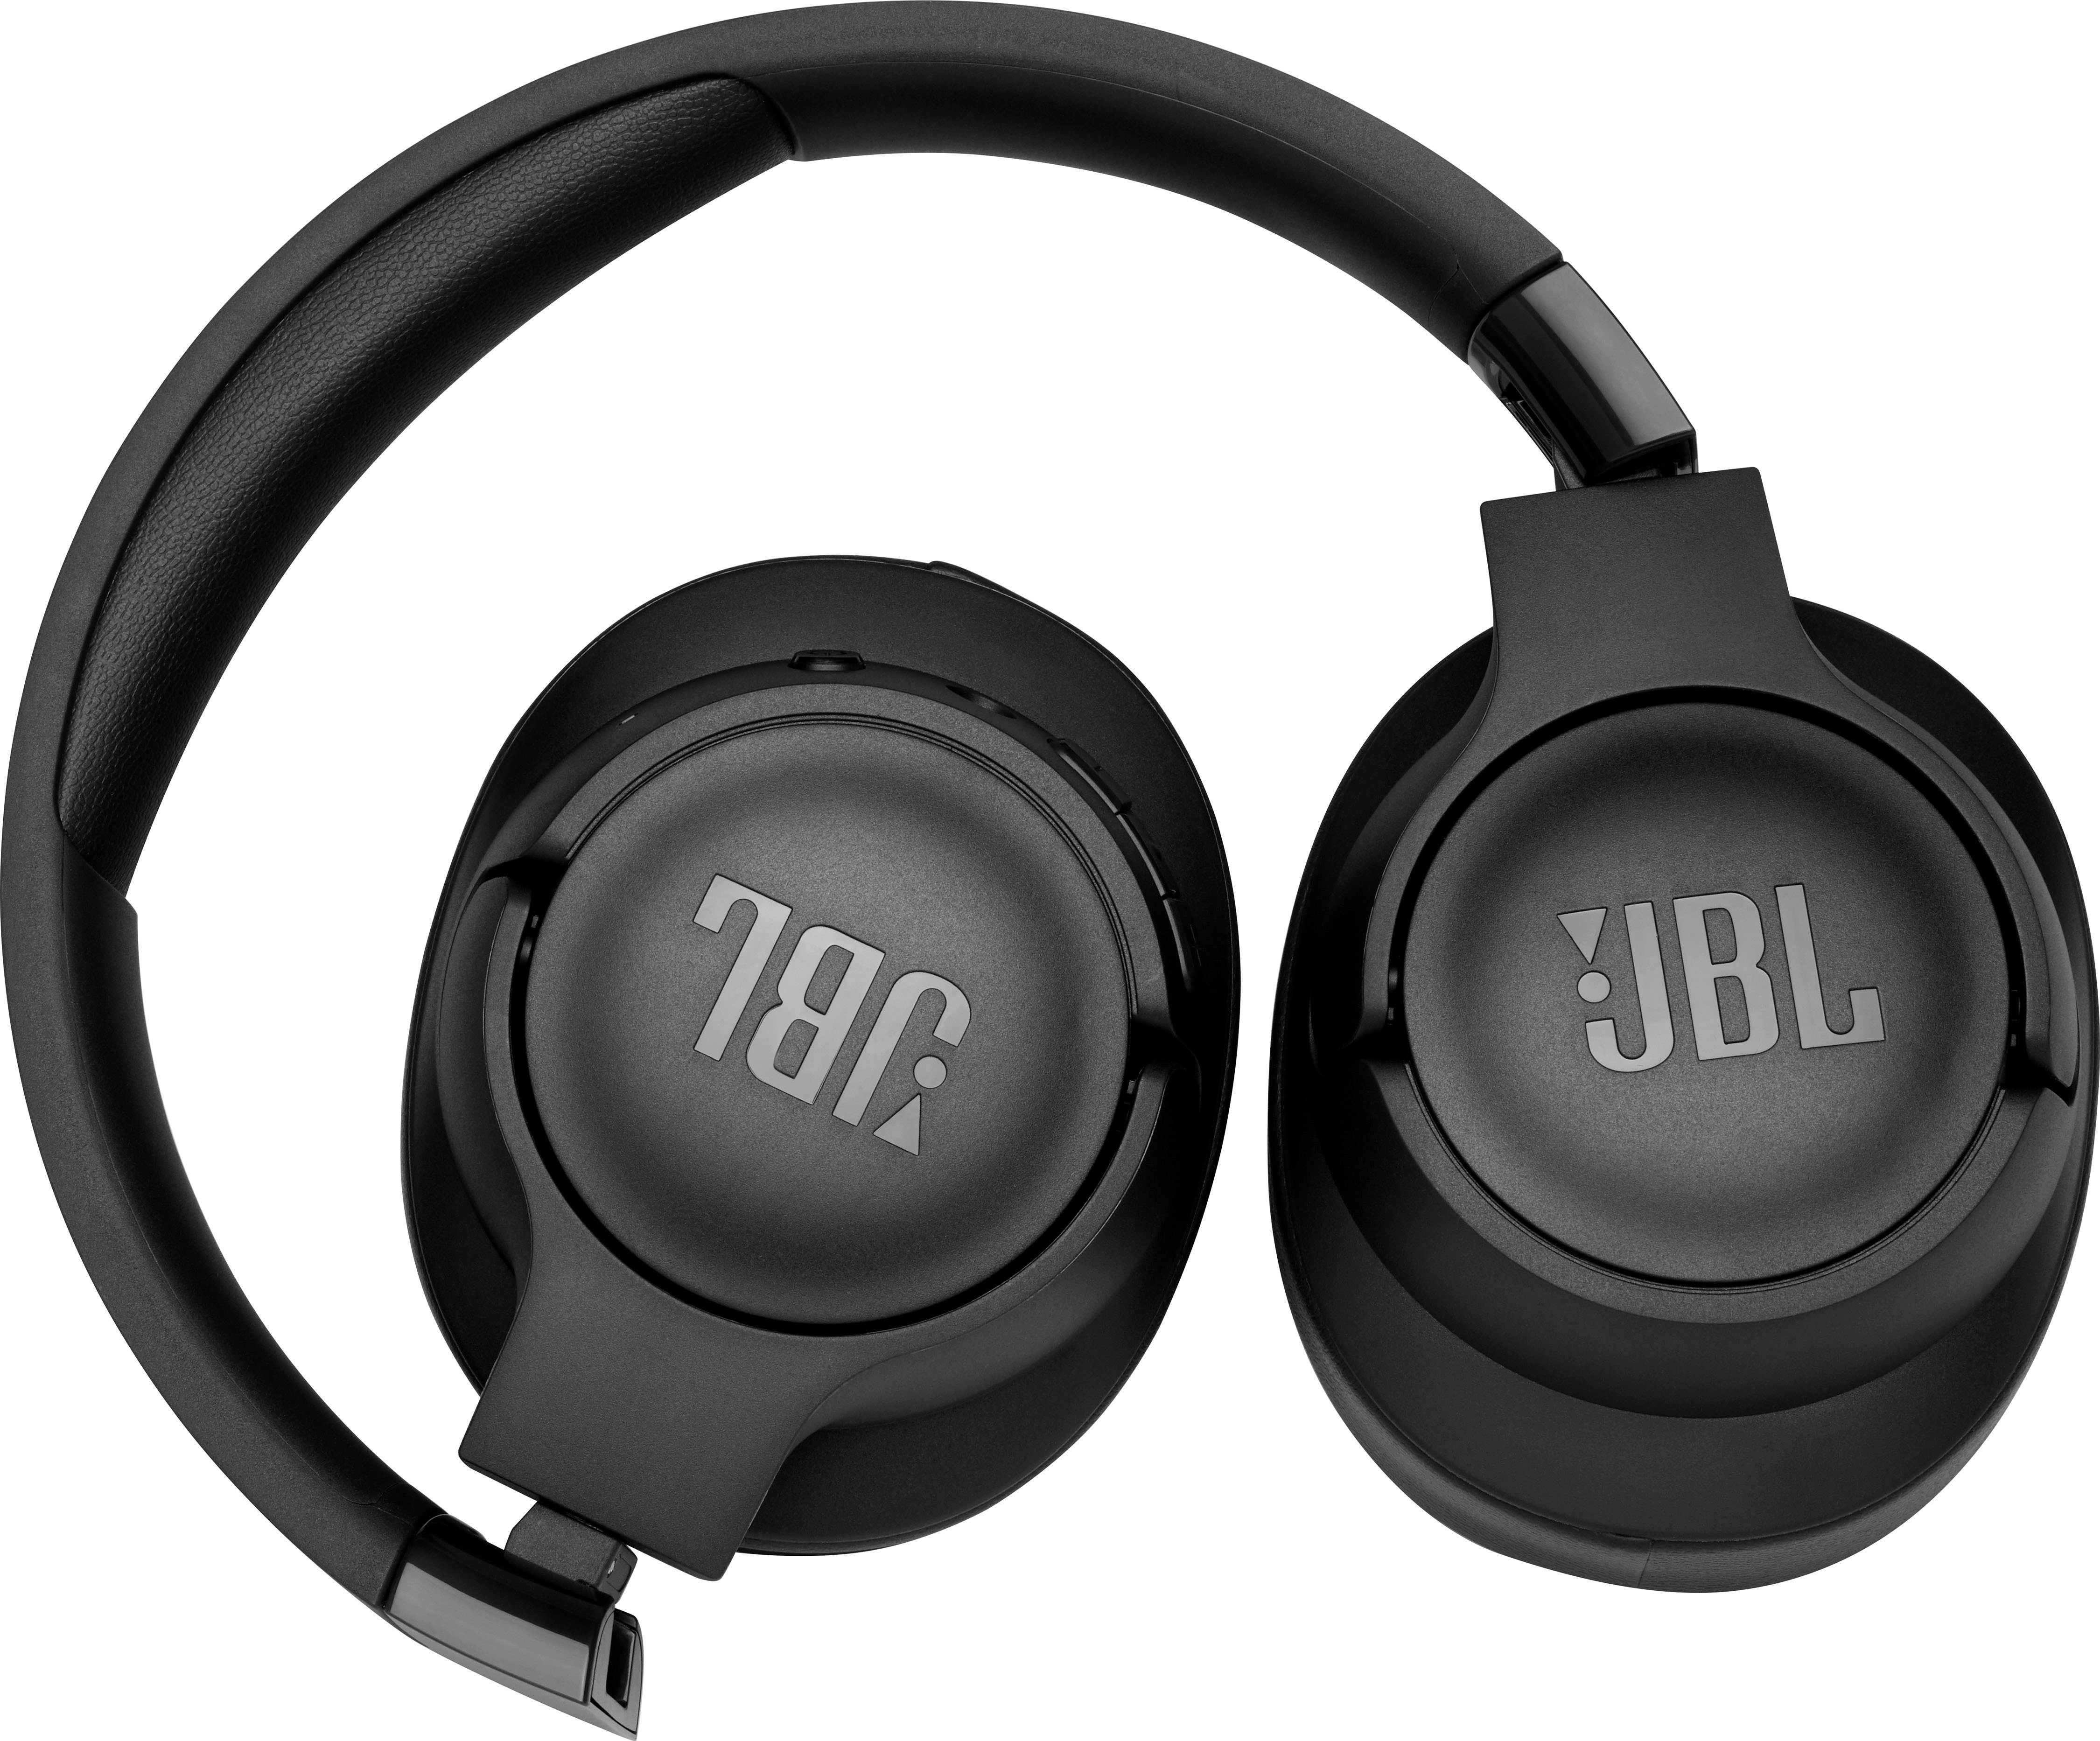 JBL TUNE Multi-Point-Verbindung) (Freisprechfunktion, kabelloser Over-Ear-Kopfhörer 710BT schwarz